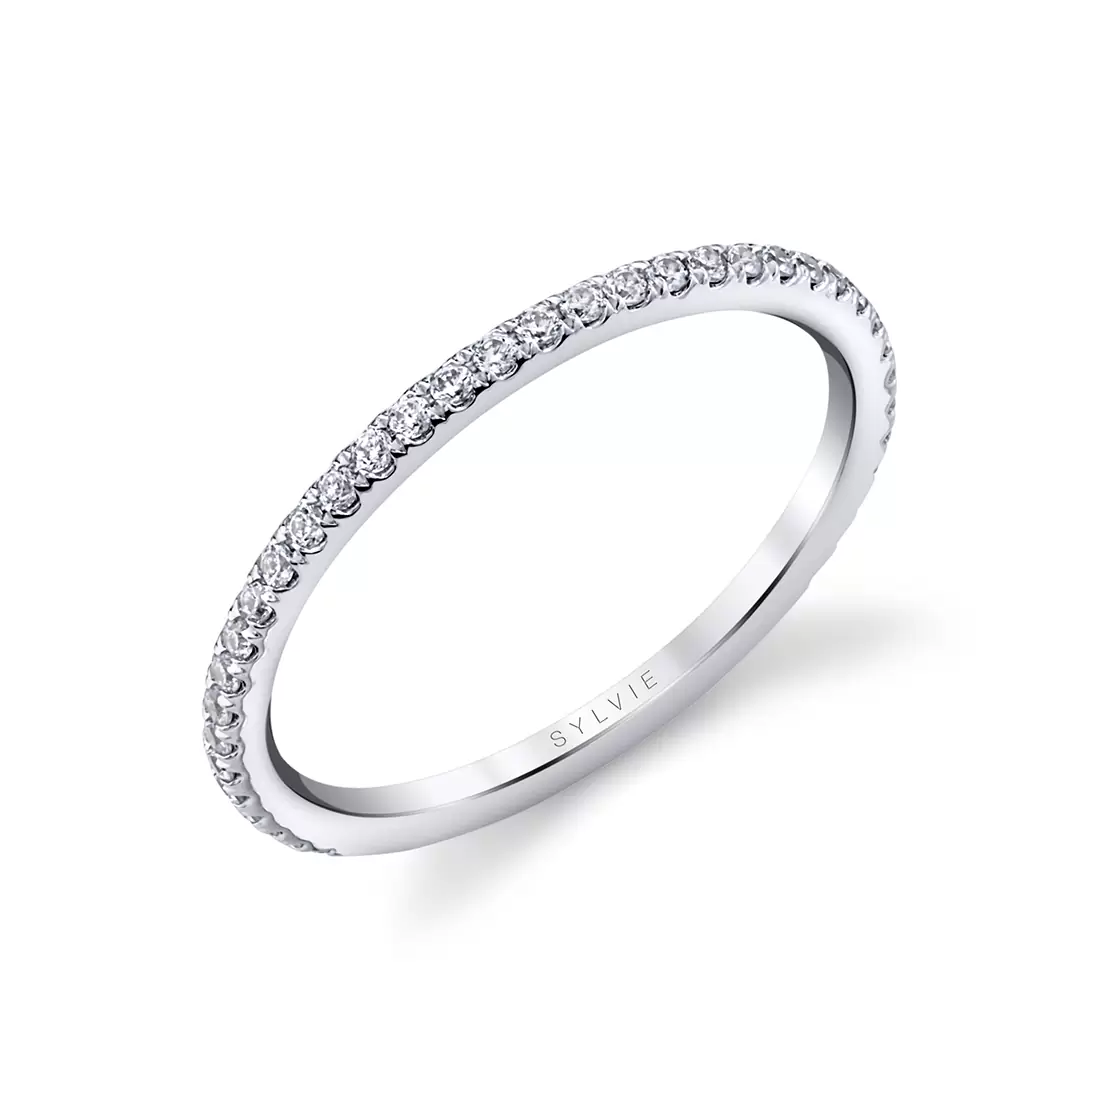 White gold, diamond classic wedding ring